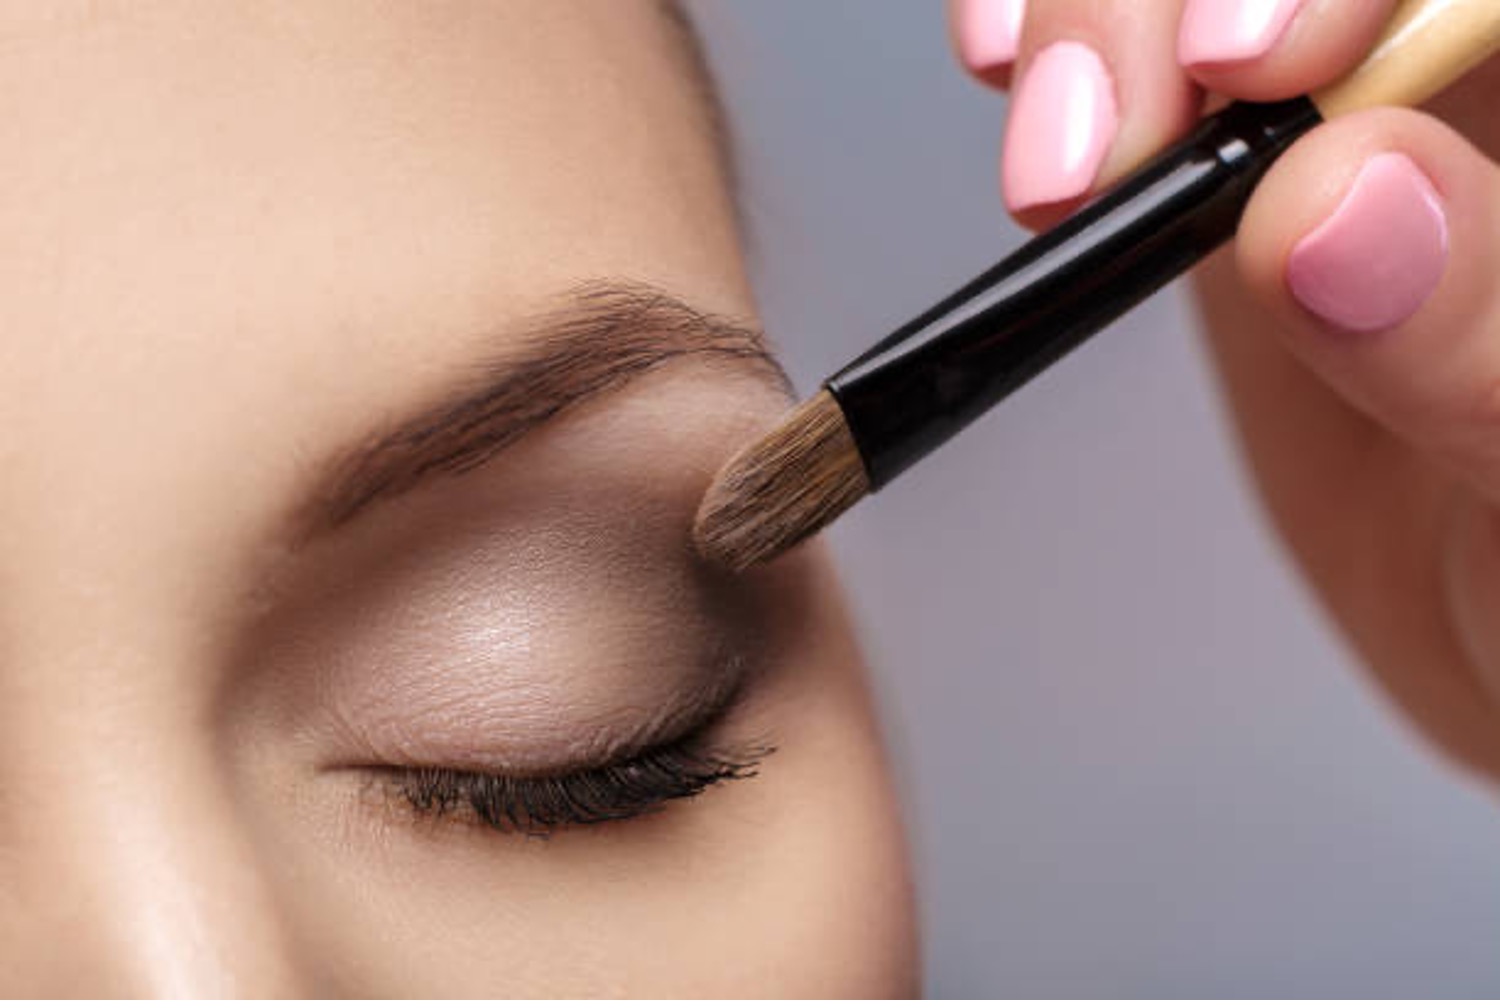 eye makeup by applying lakm%C3%A9 mascara